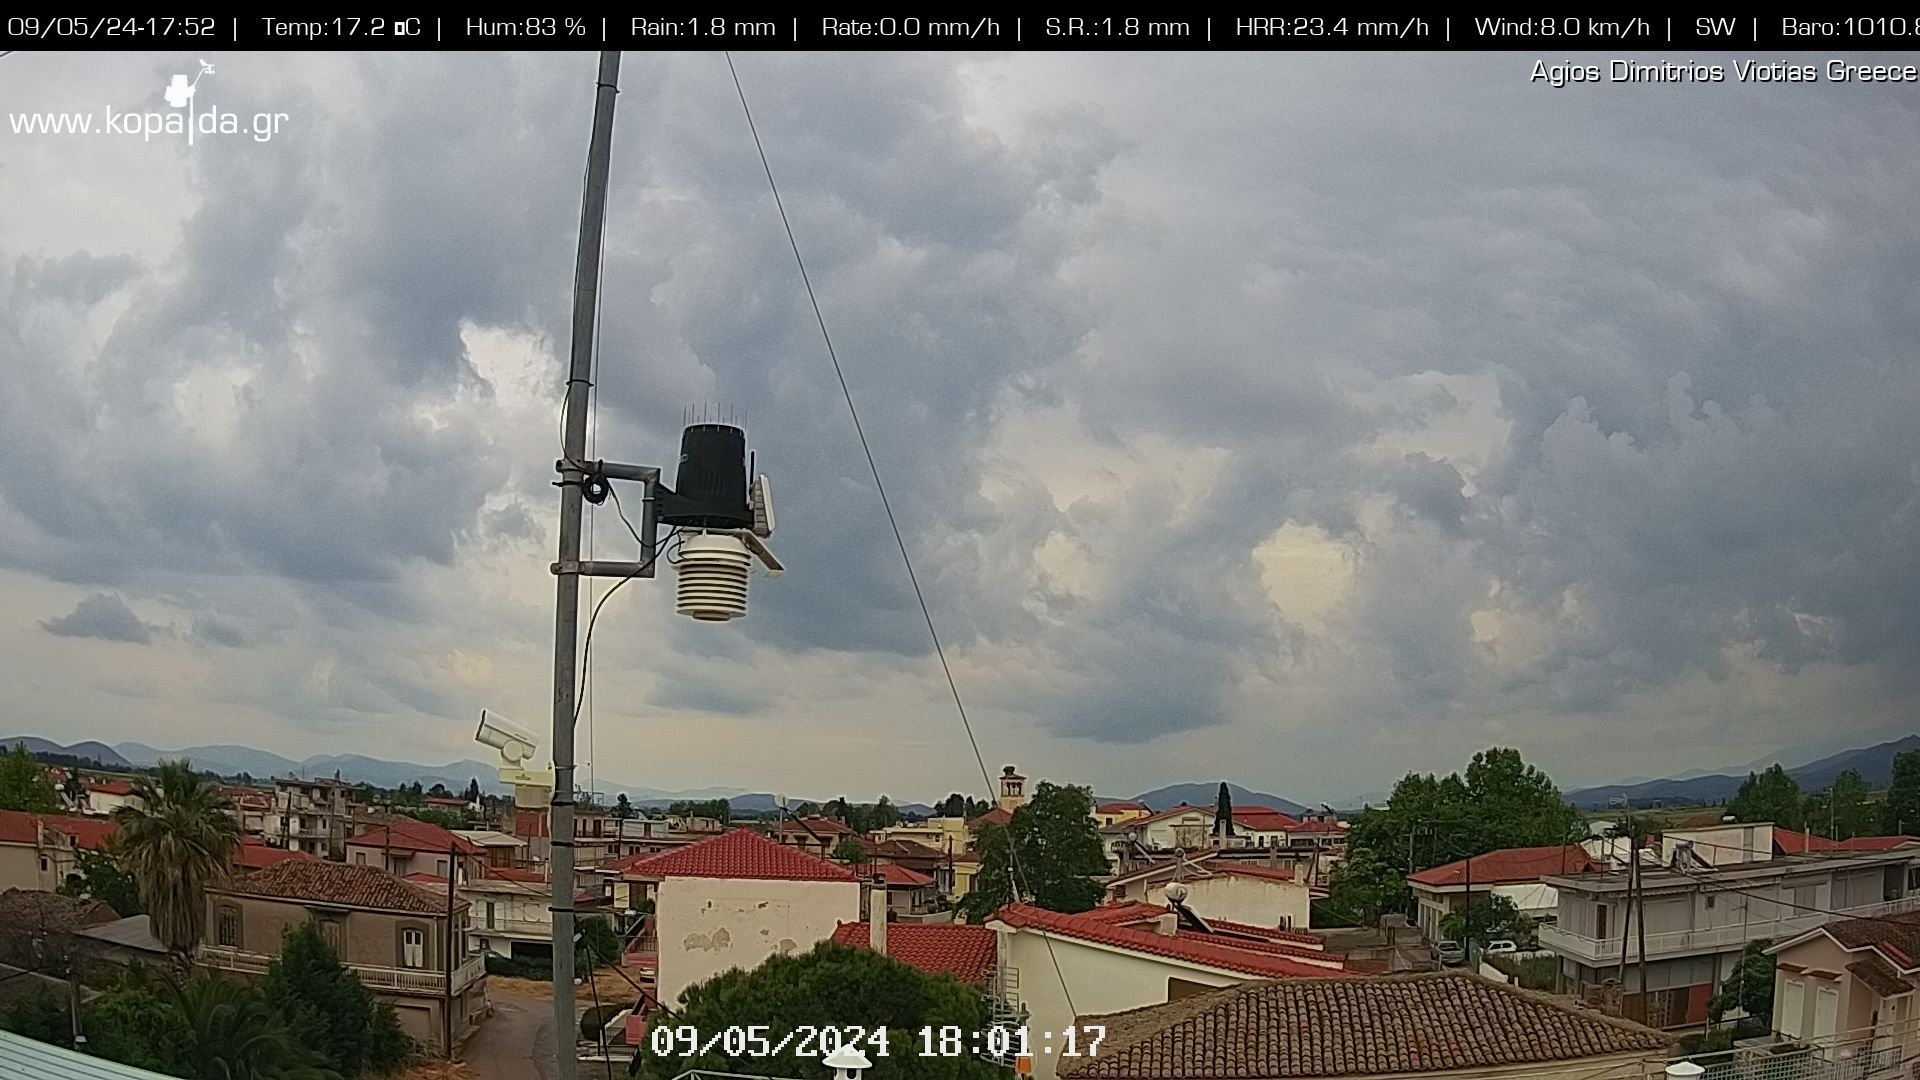 Webcam of the island of Crete Pirati online